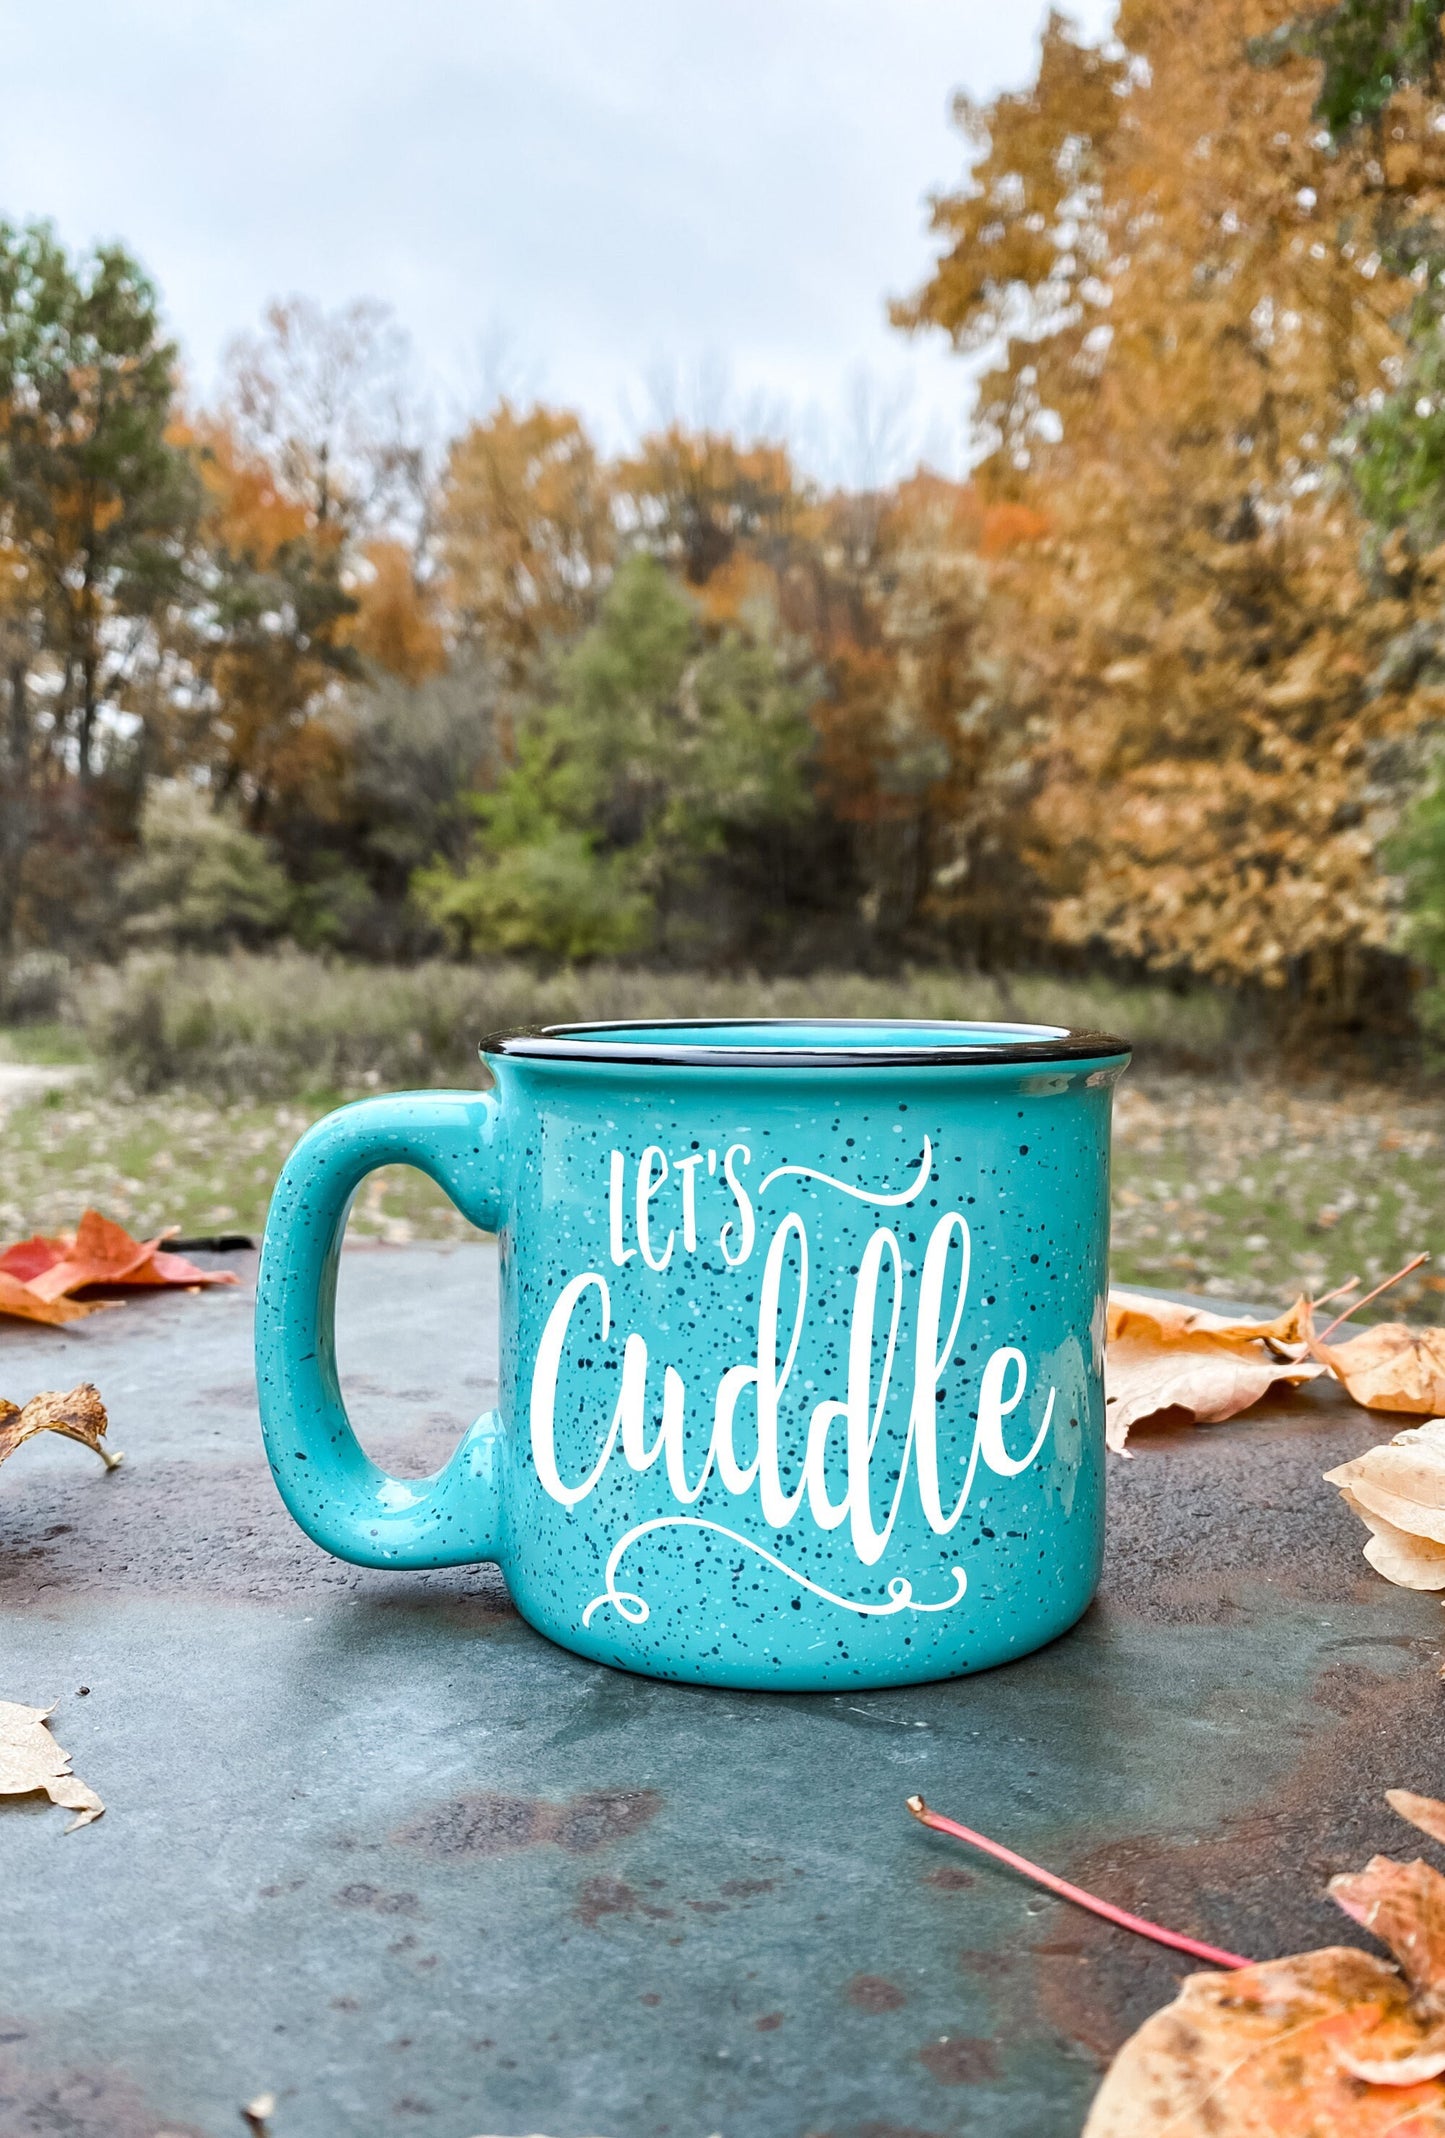 Let's Cuddle Campfire Mug